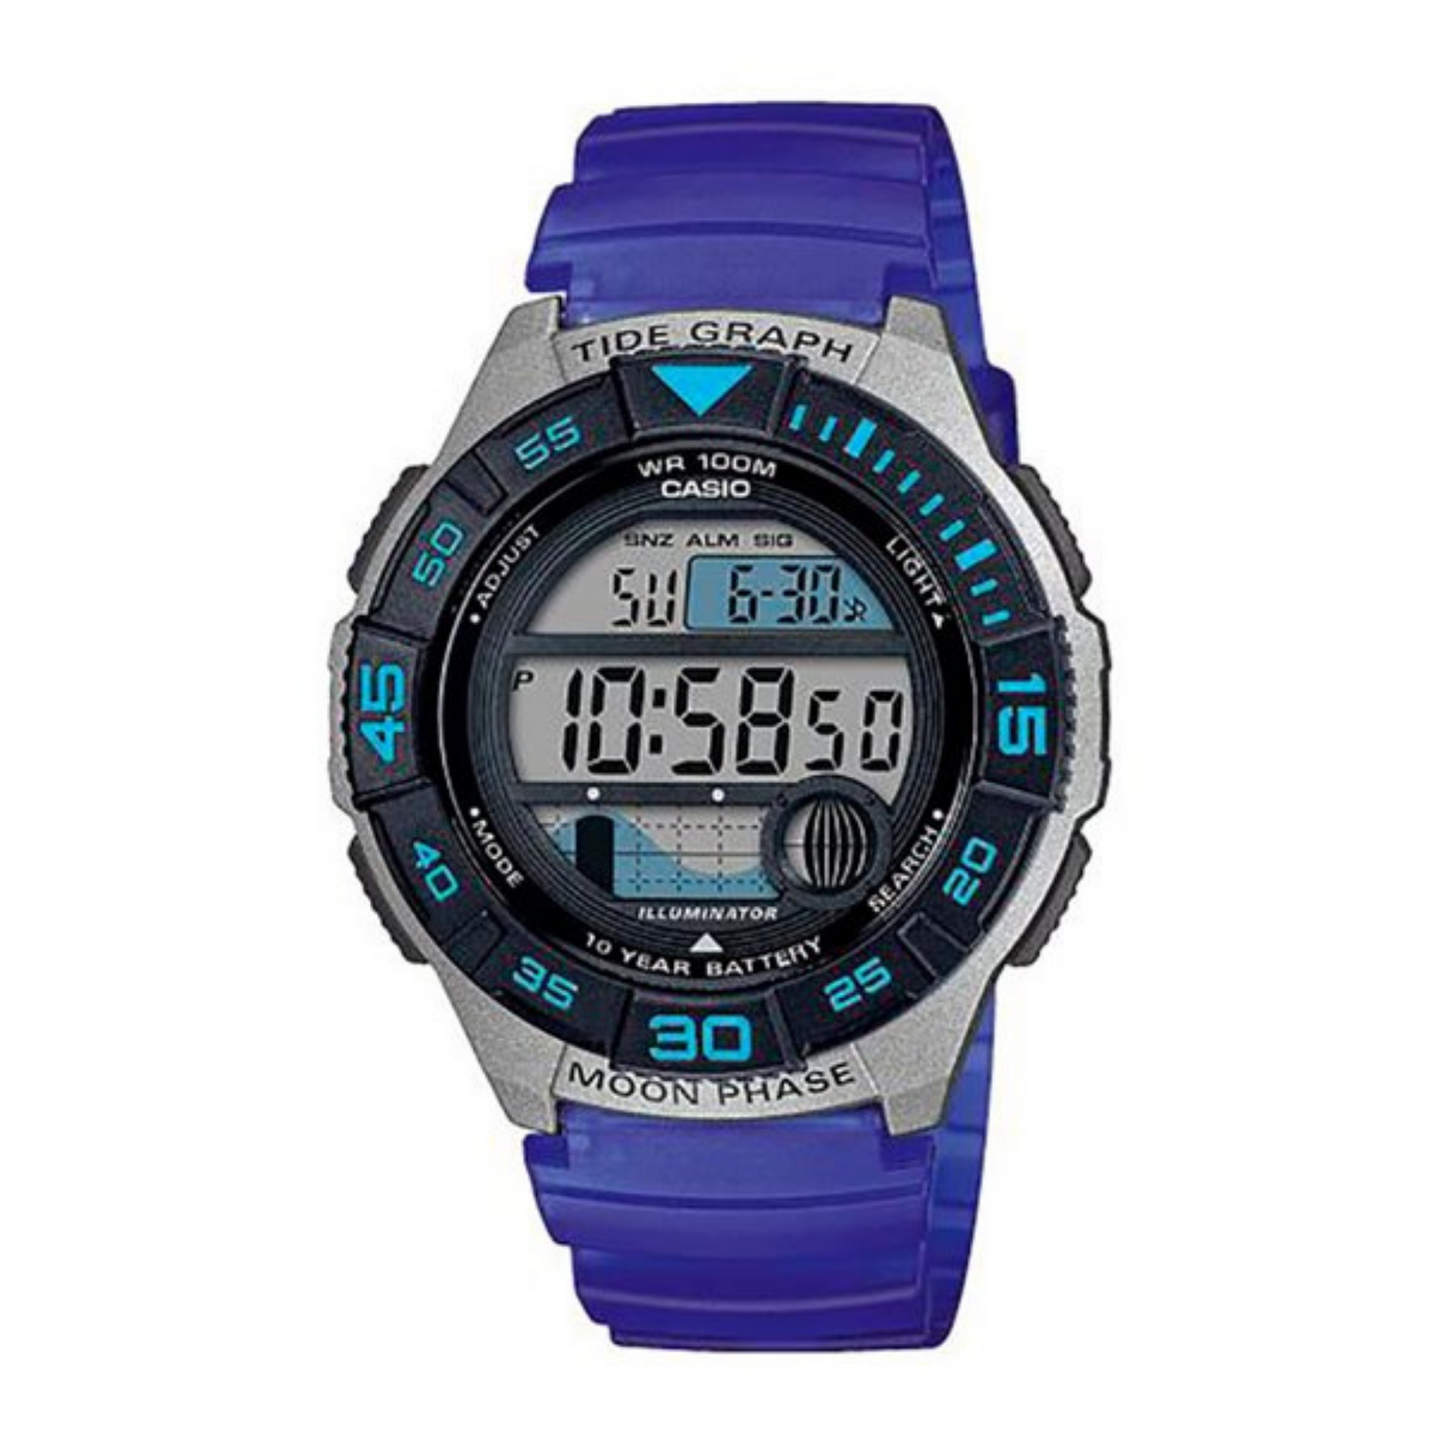 Reloj Casio hombre Modelo WS-1100H-2AV